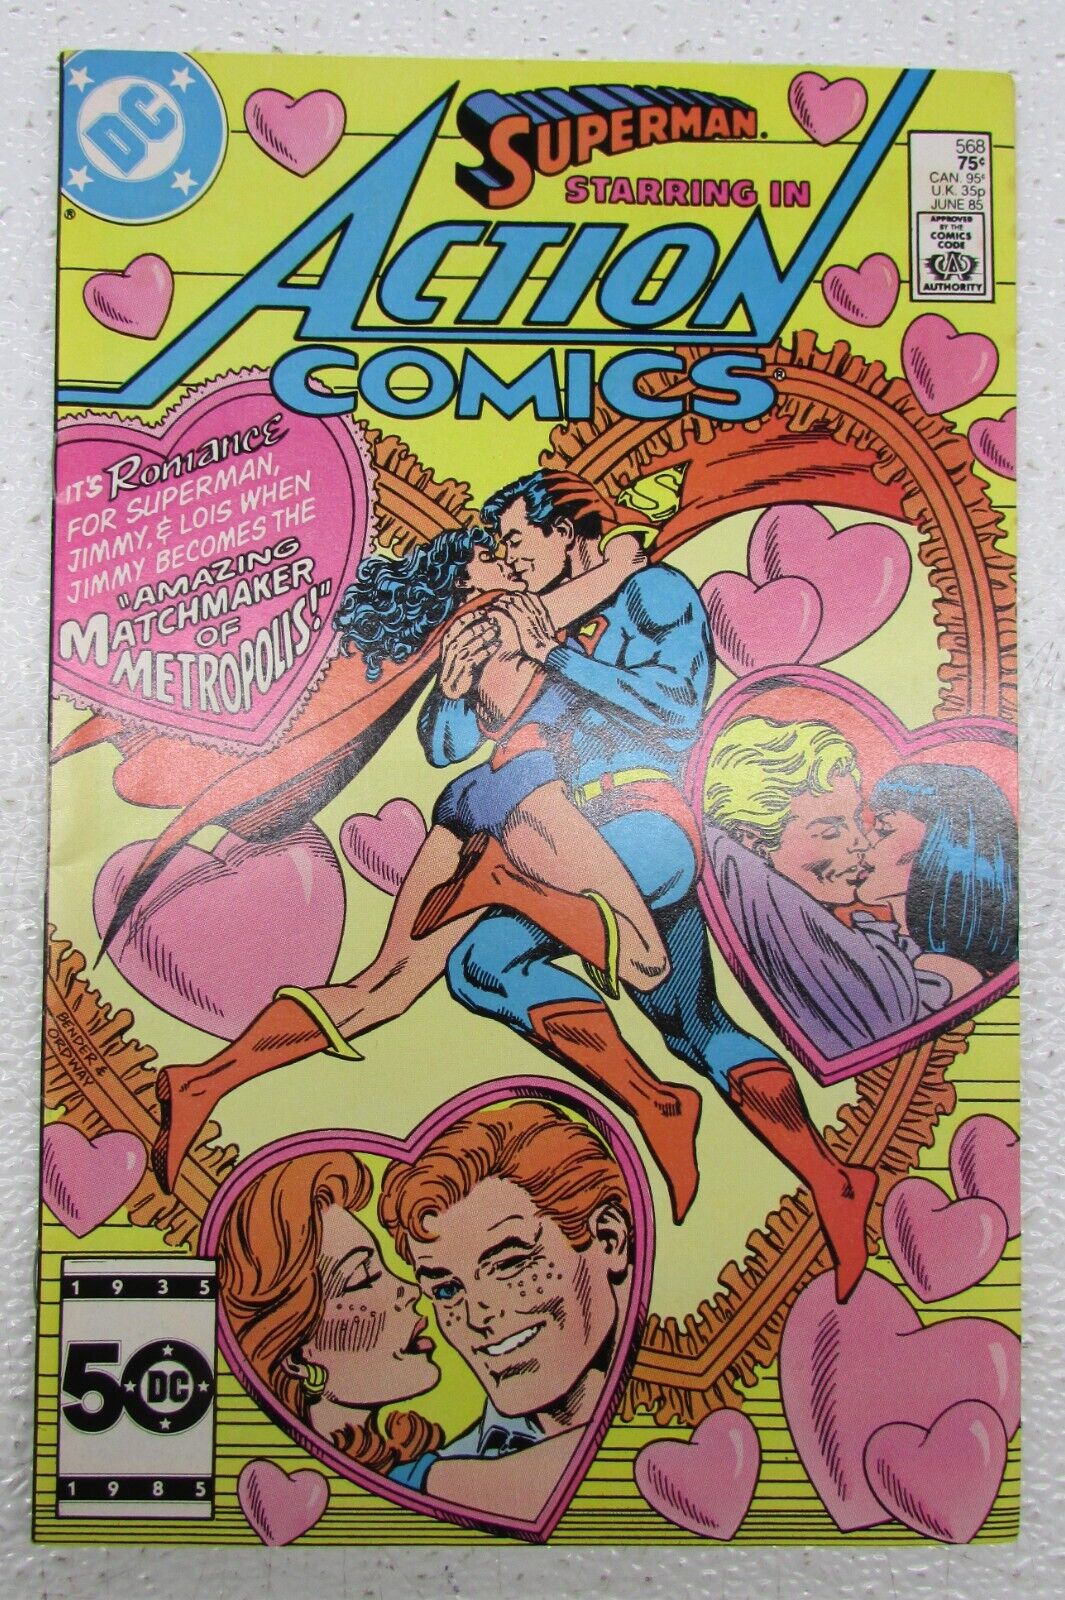 DC COMIC BOOK SUPERMAN STARRING IN ACTION COMICS #568 JUNE 1985